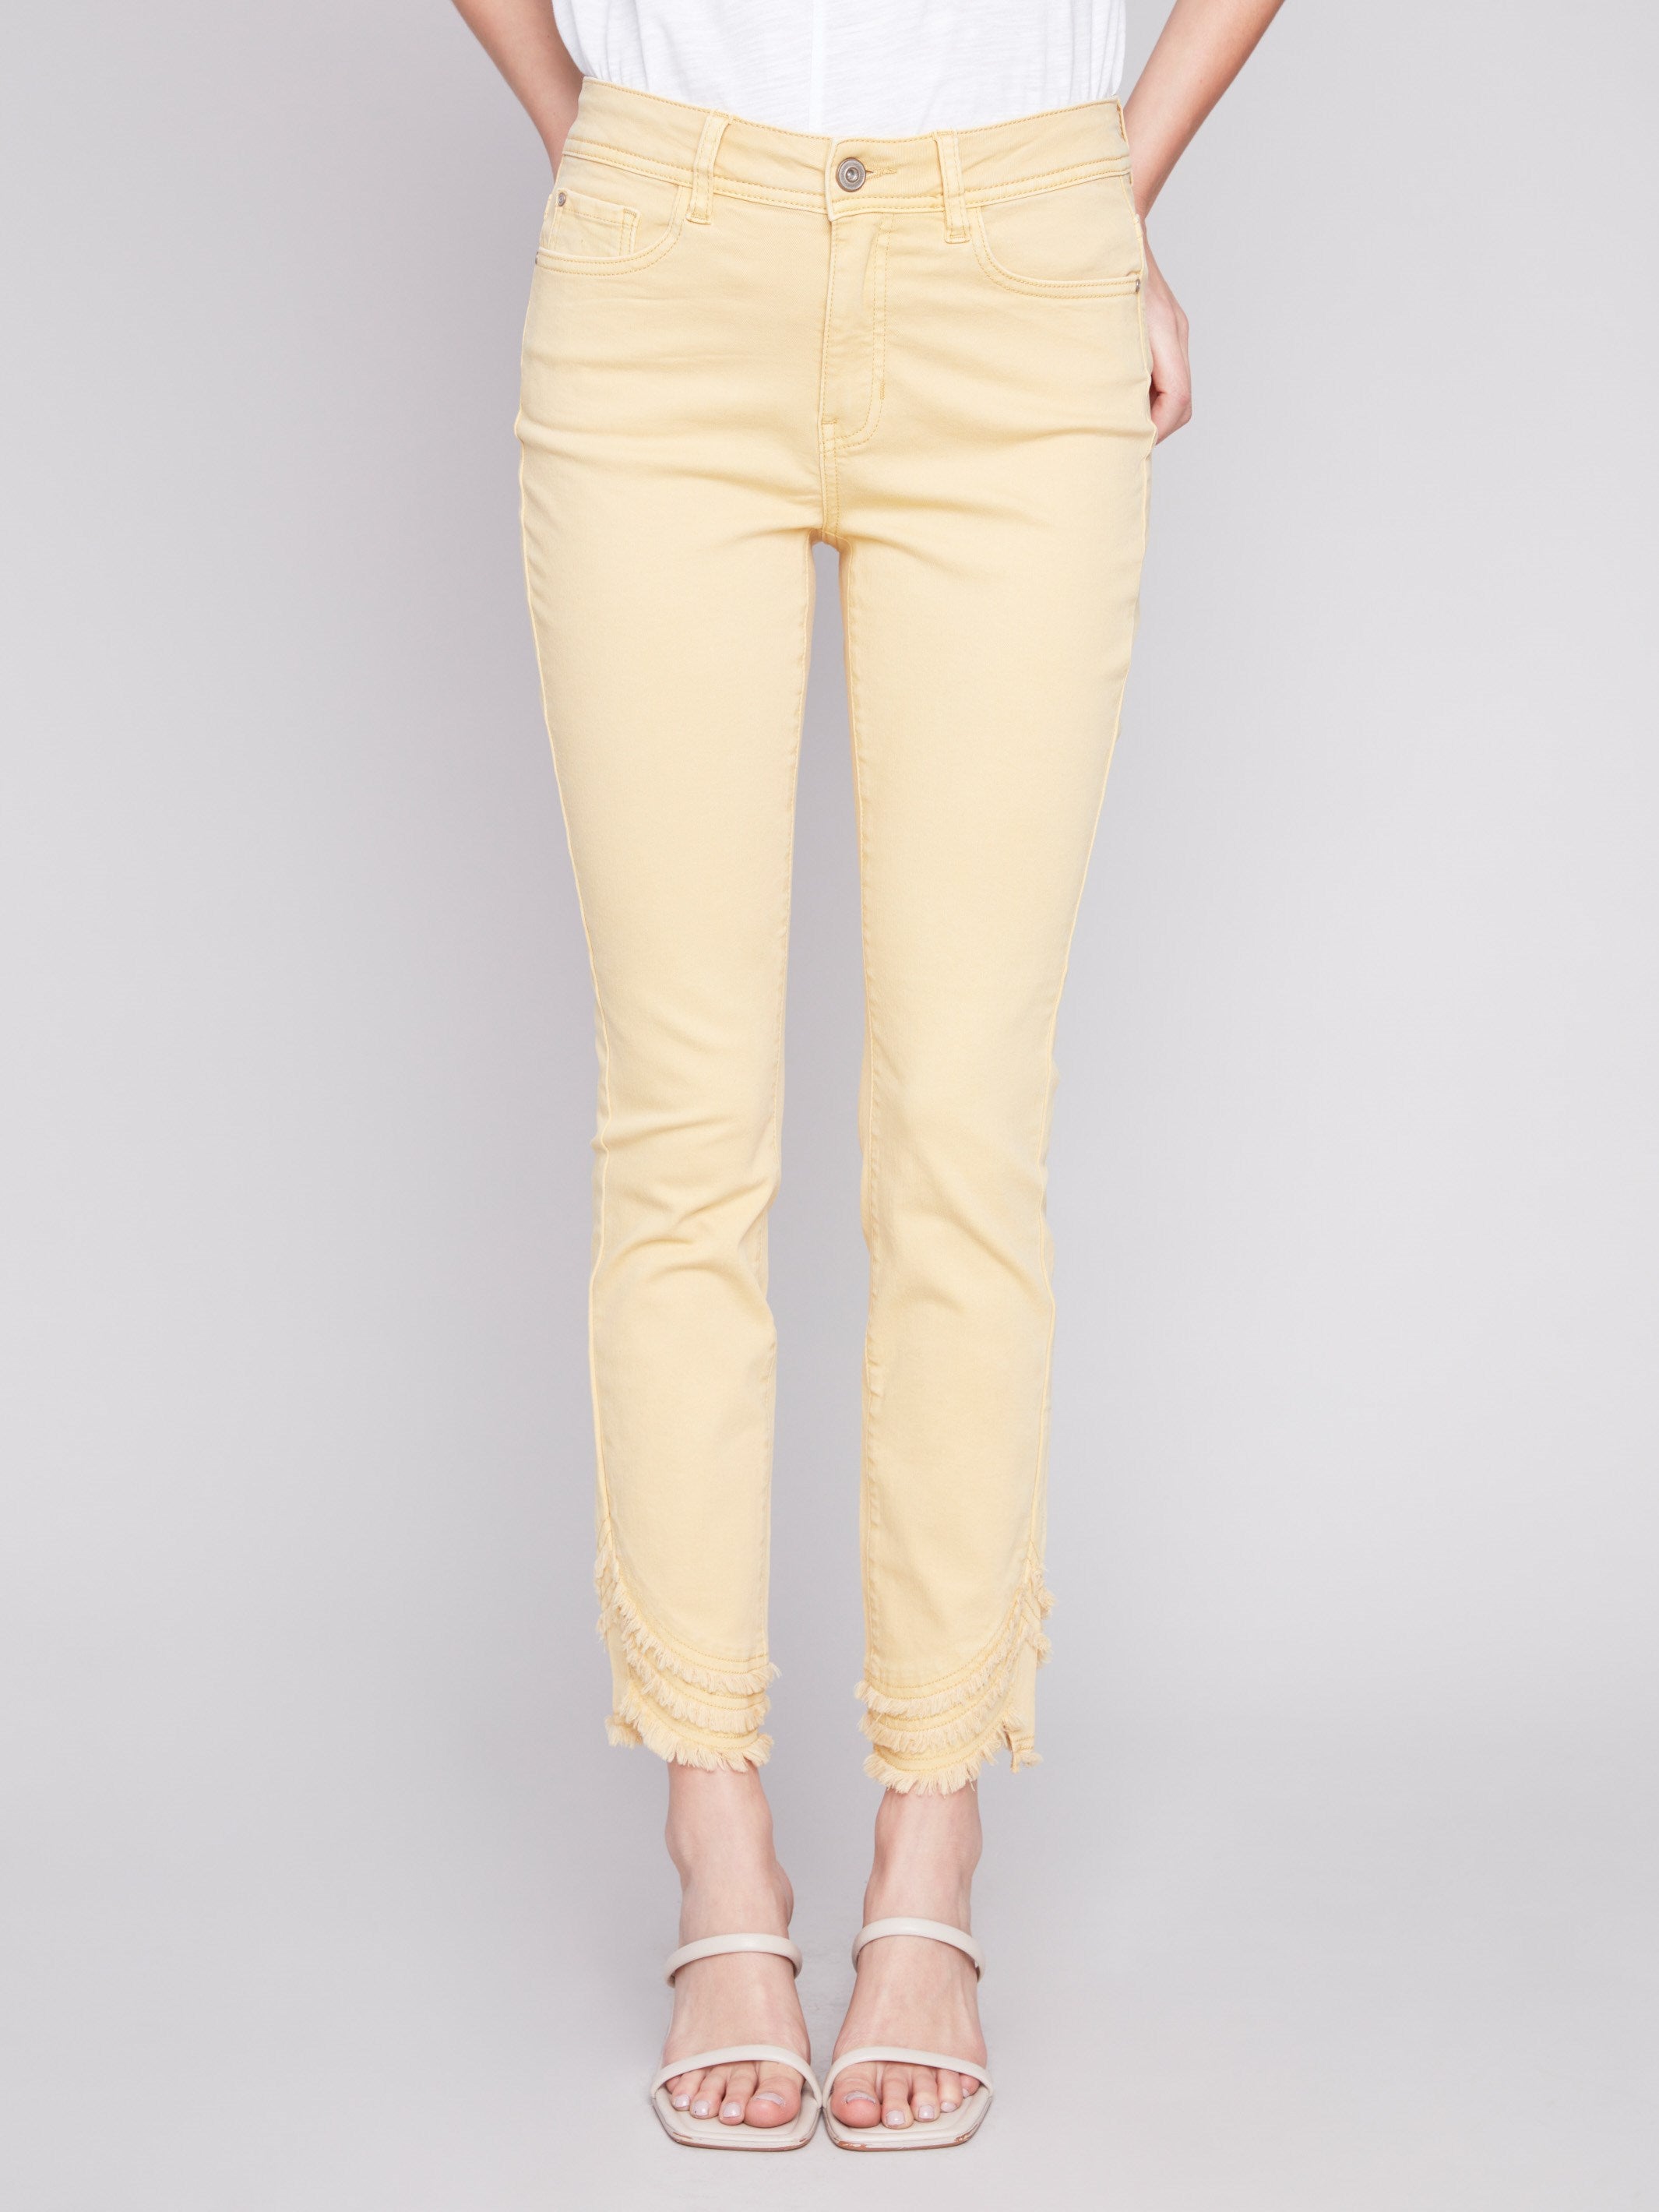 Frayed Hem Twill Pants - Lemon - Charlie B Collection Canada - Image 2